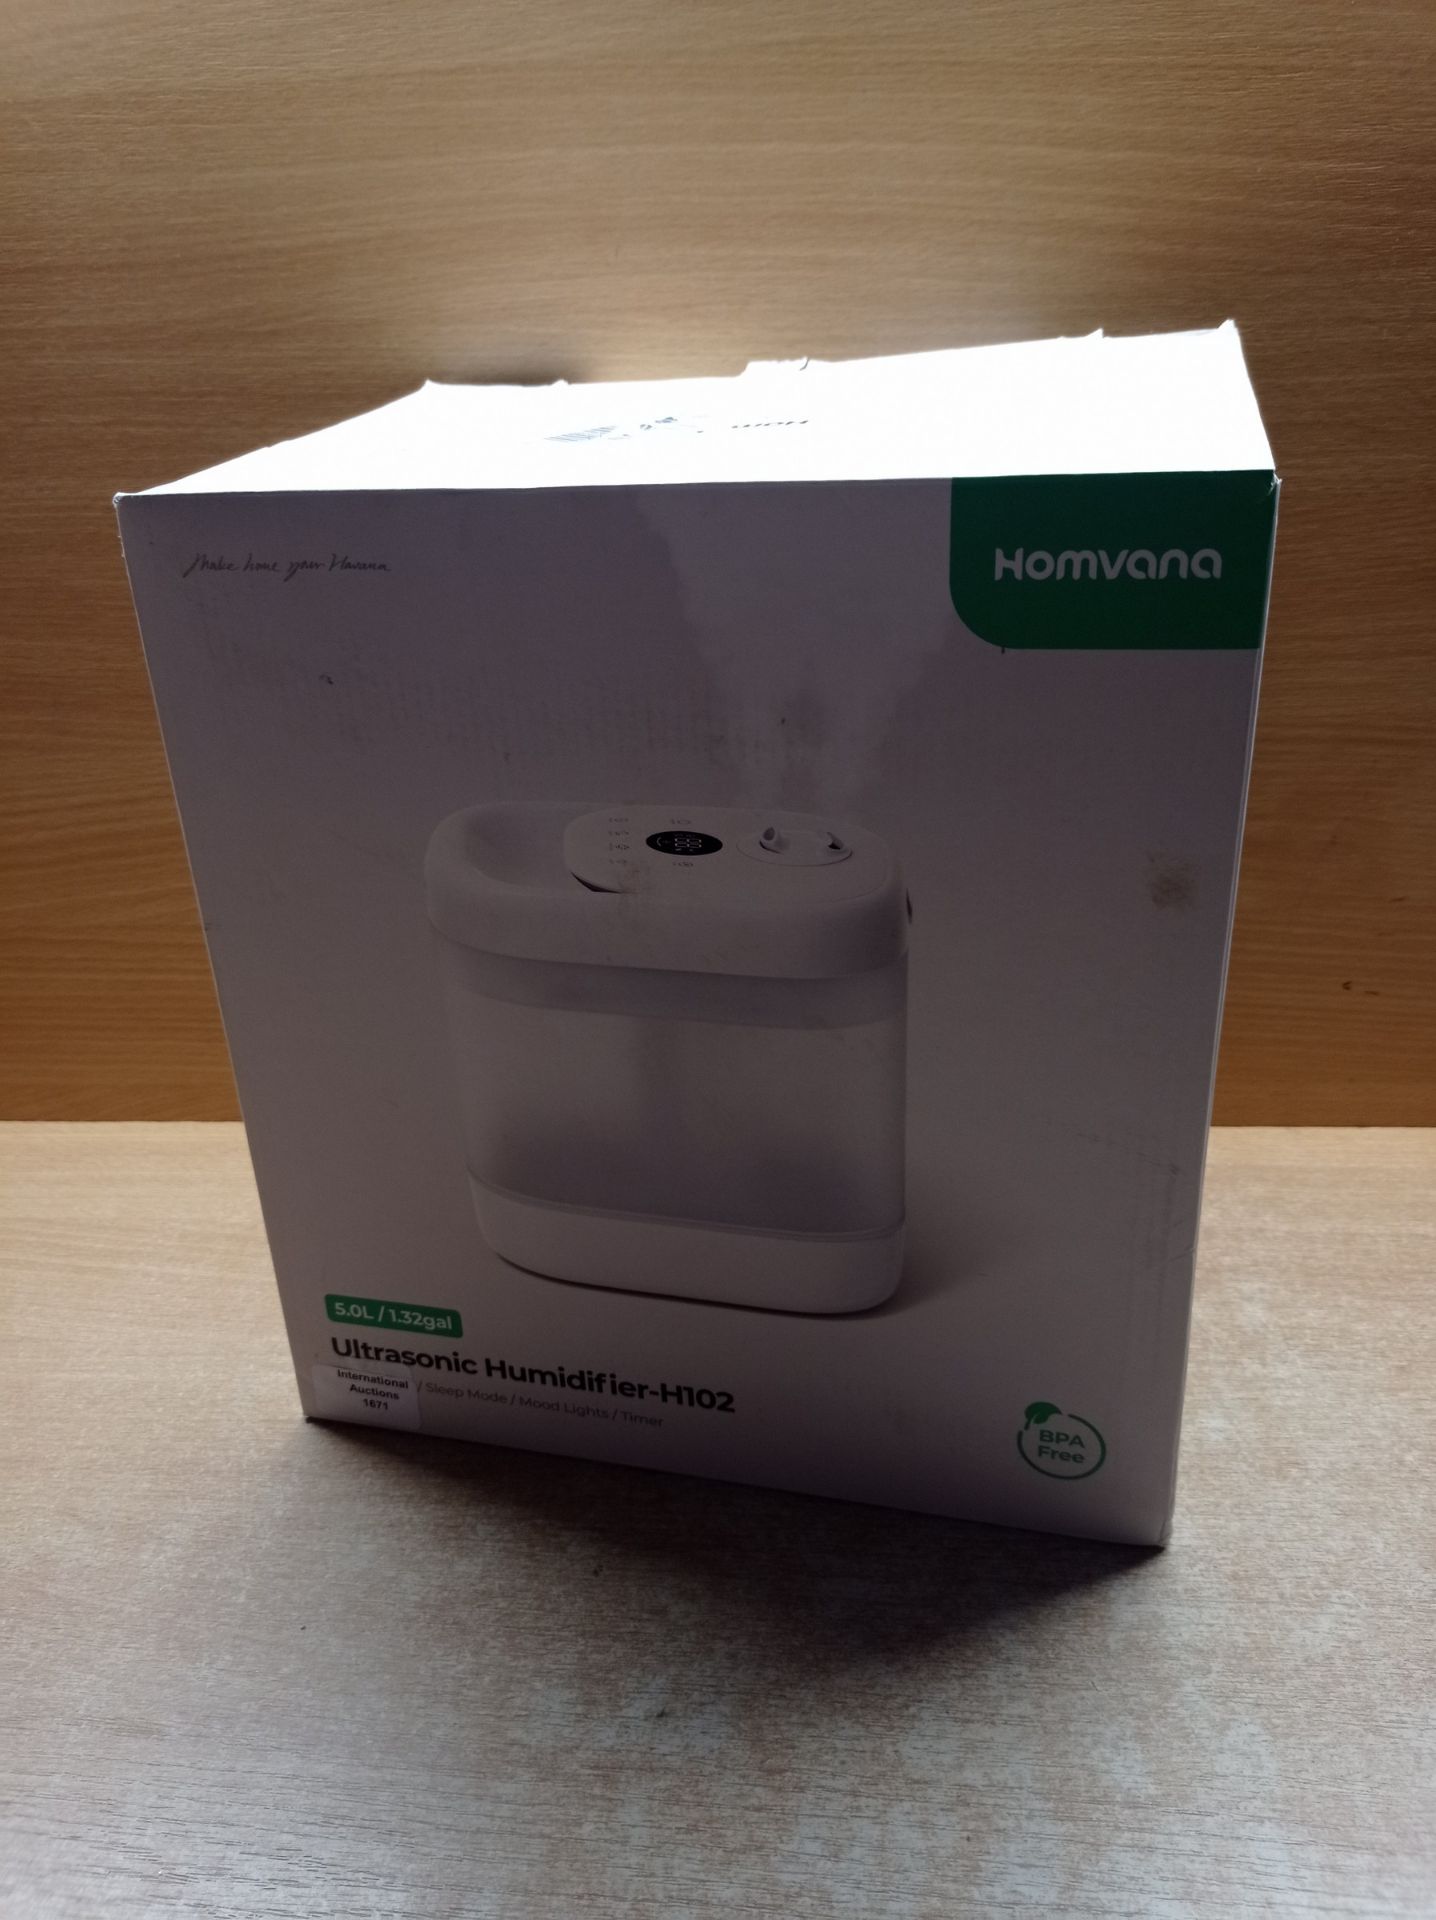 RRP £38.80 Homvana Humidifier for Bedroom - Image 2 of 2